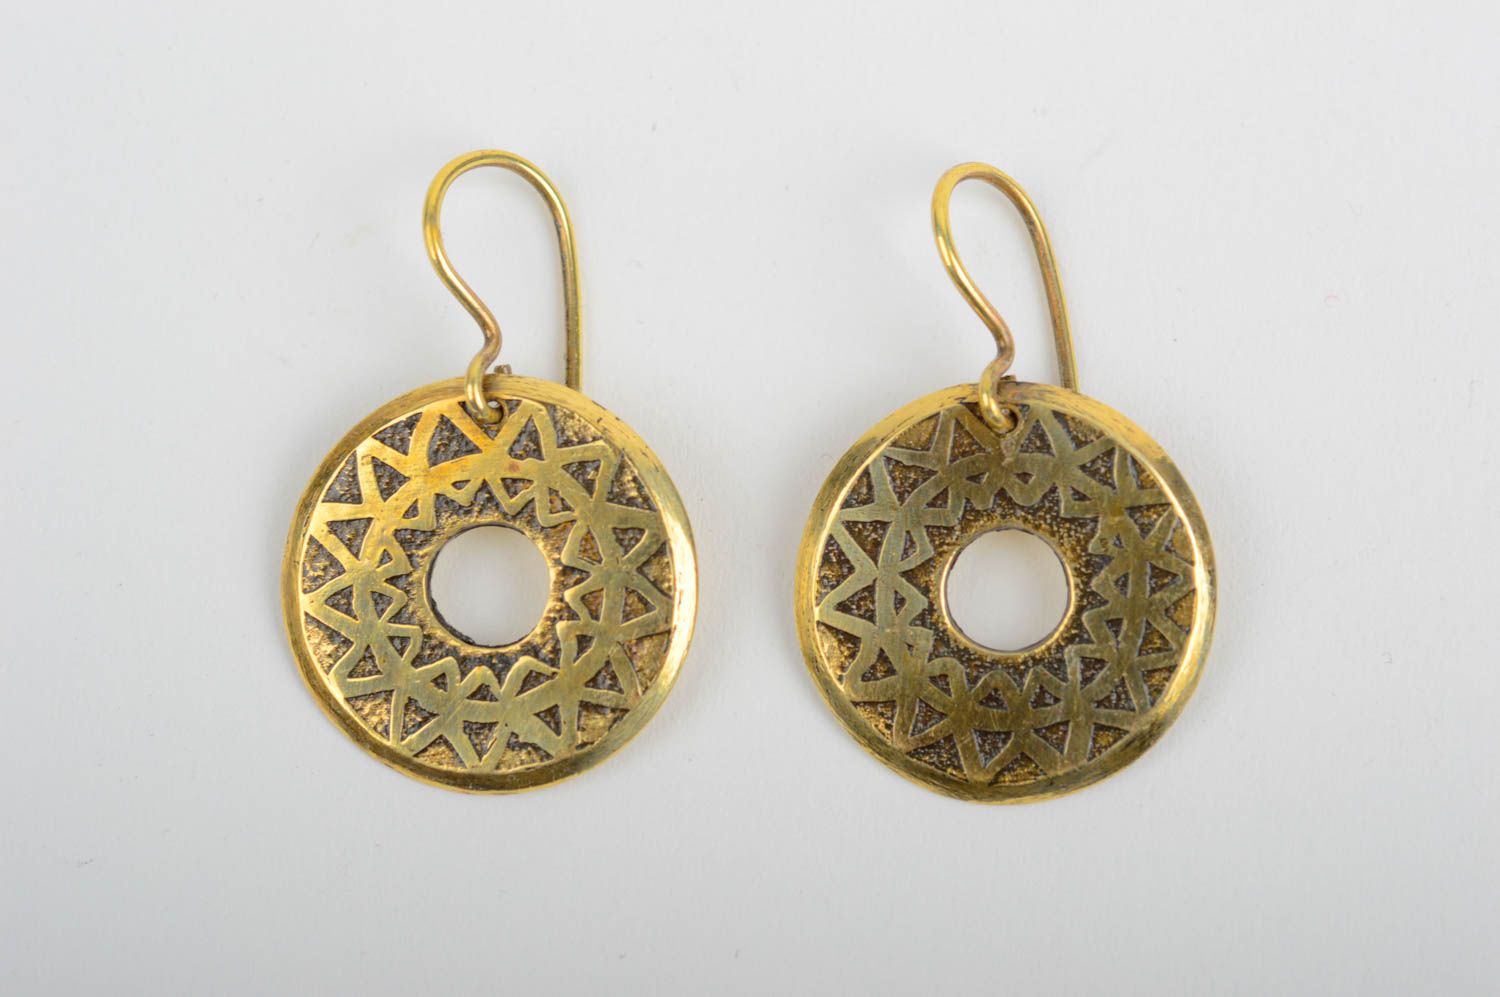 Beautiful handmade metal earrings artisan jewelry designs fashion tips photo 1